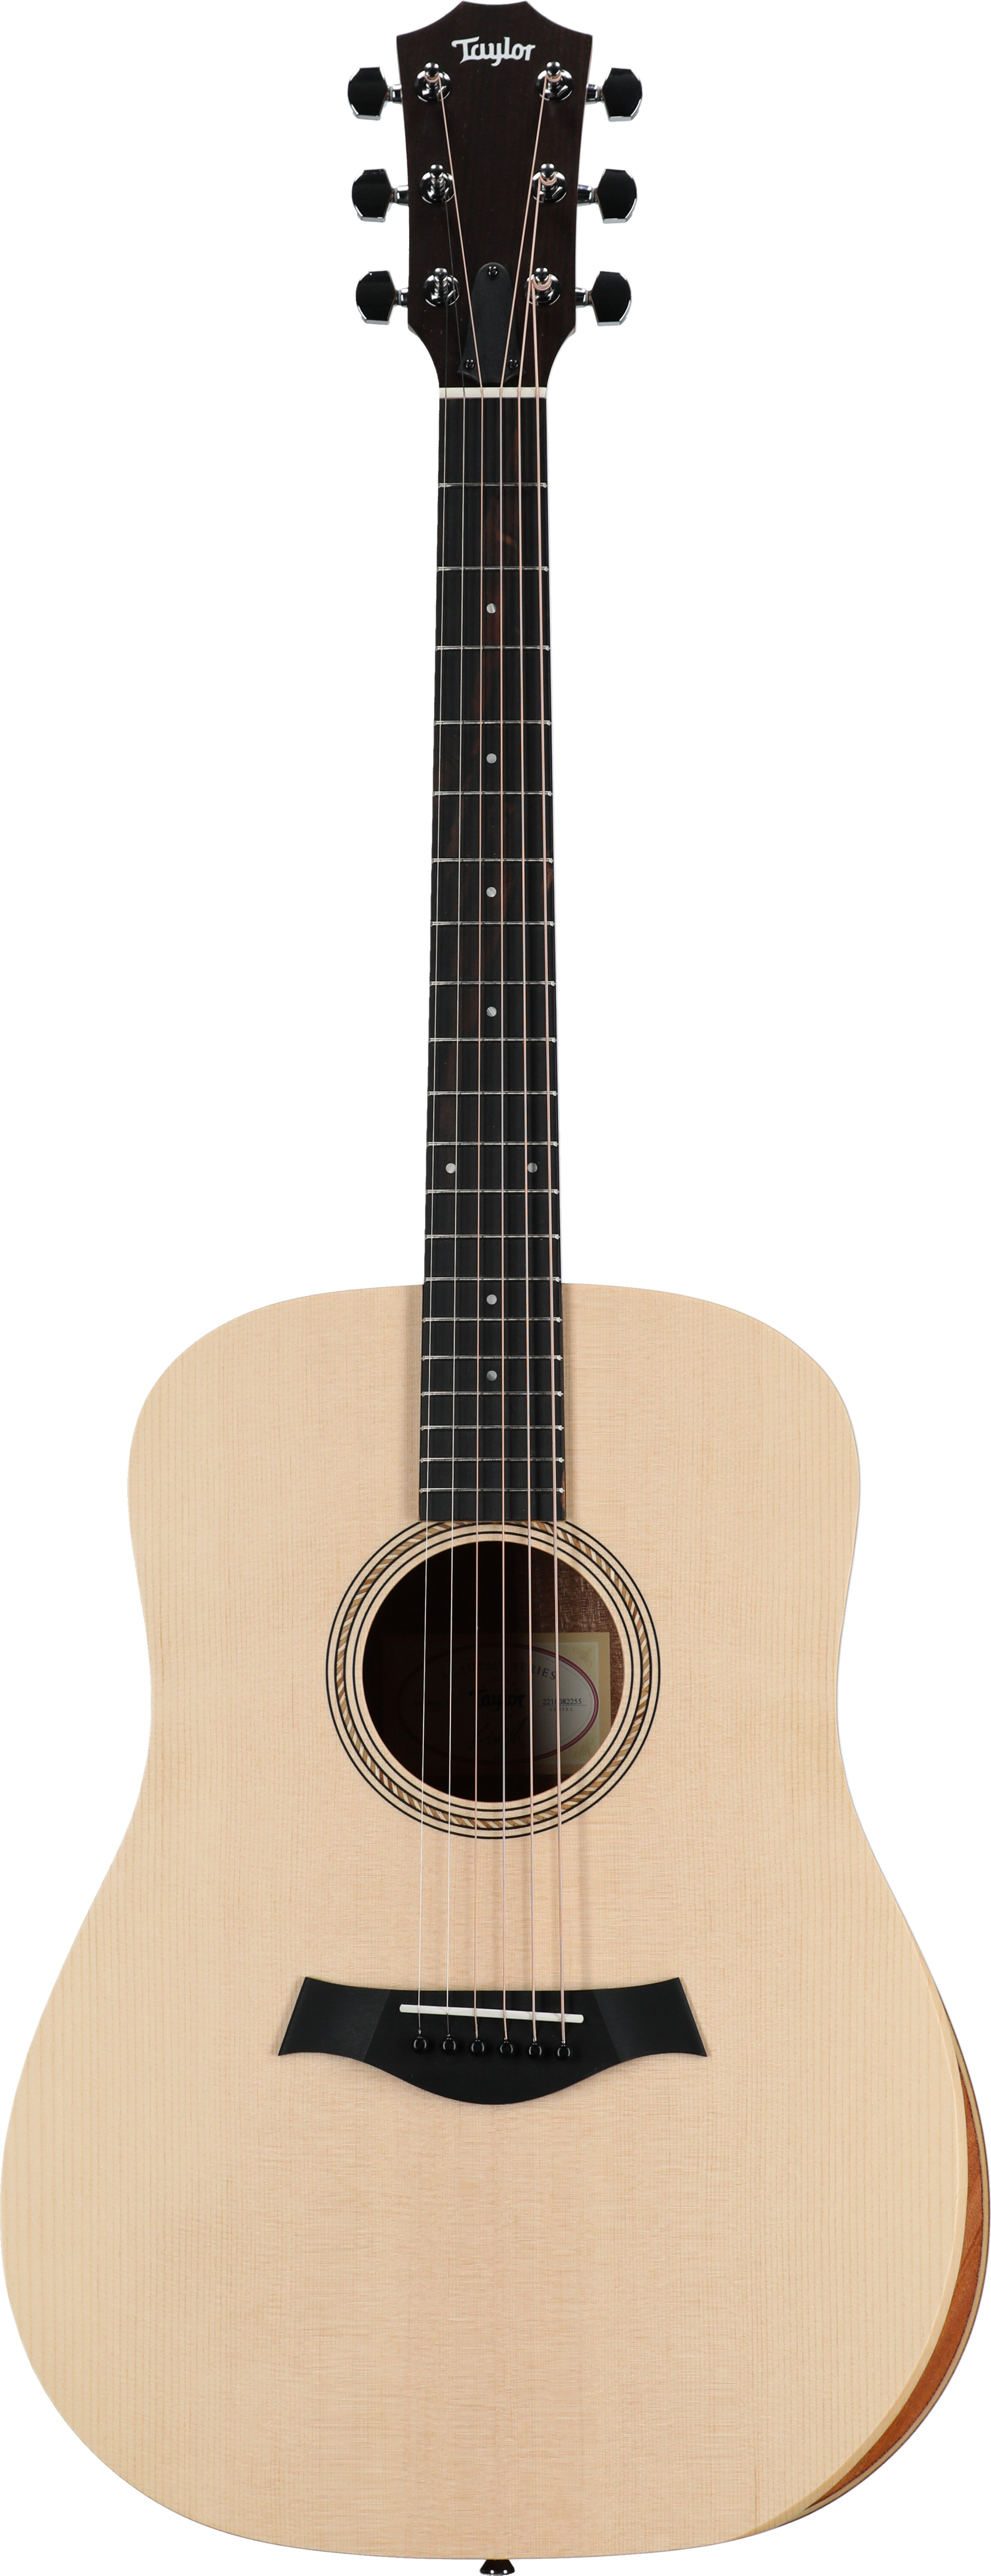 Taylor Guitars Academy10-LH-22